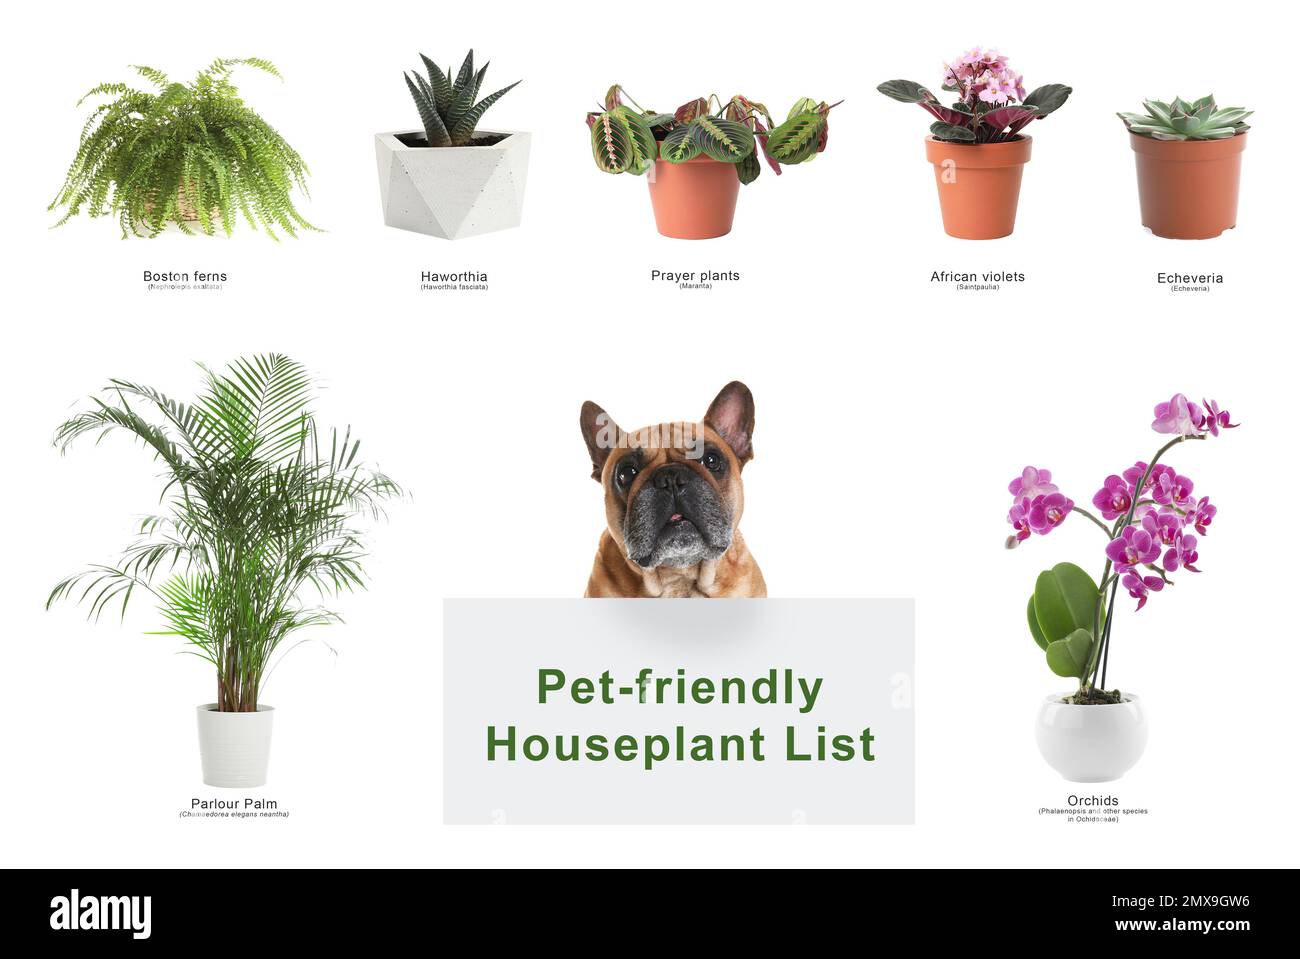 List of pet-friendly houseplants on white background Stock Photo